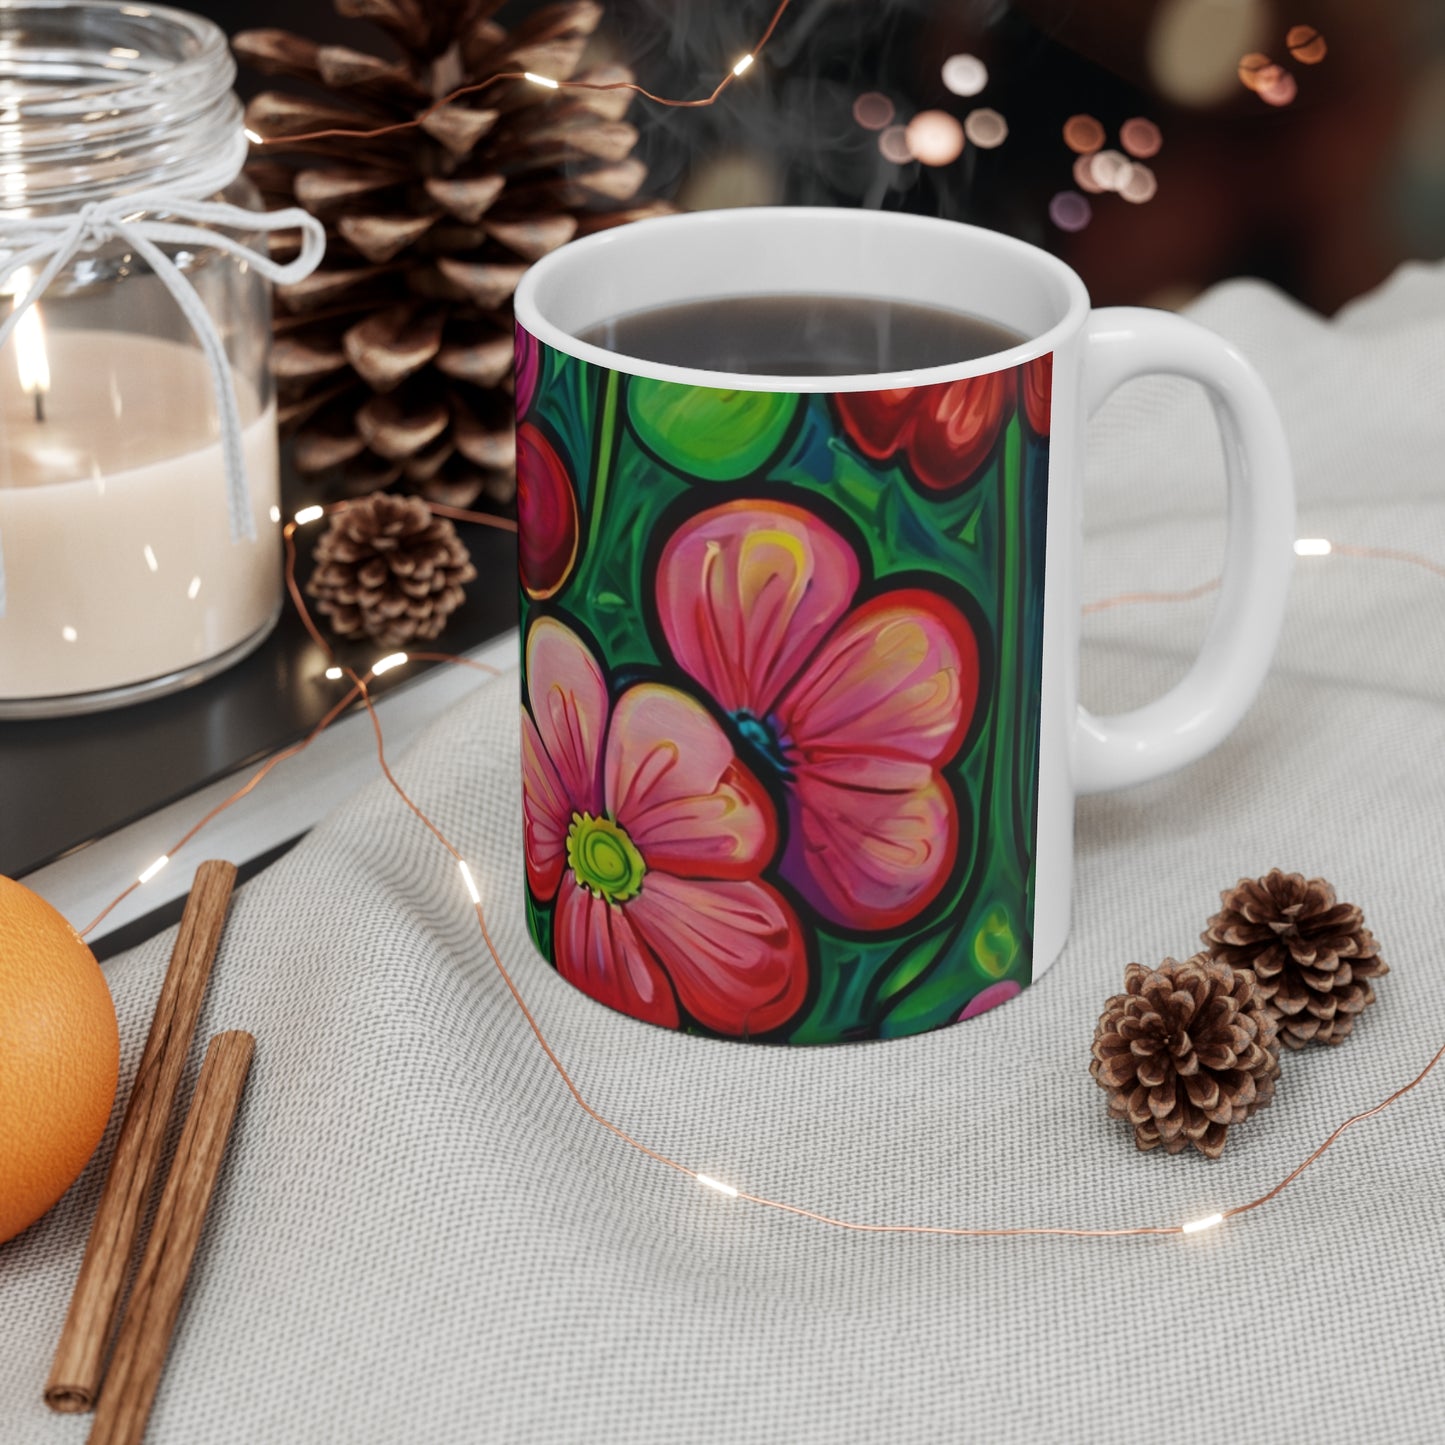 Colourful Clovers Mug - Ceramic Coffee Mug 11oz